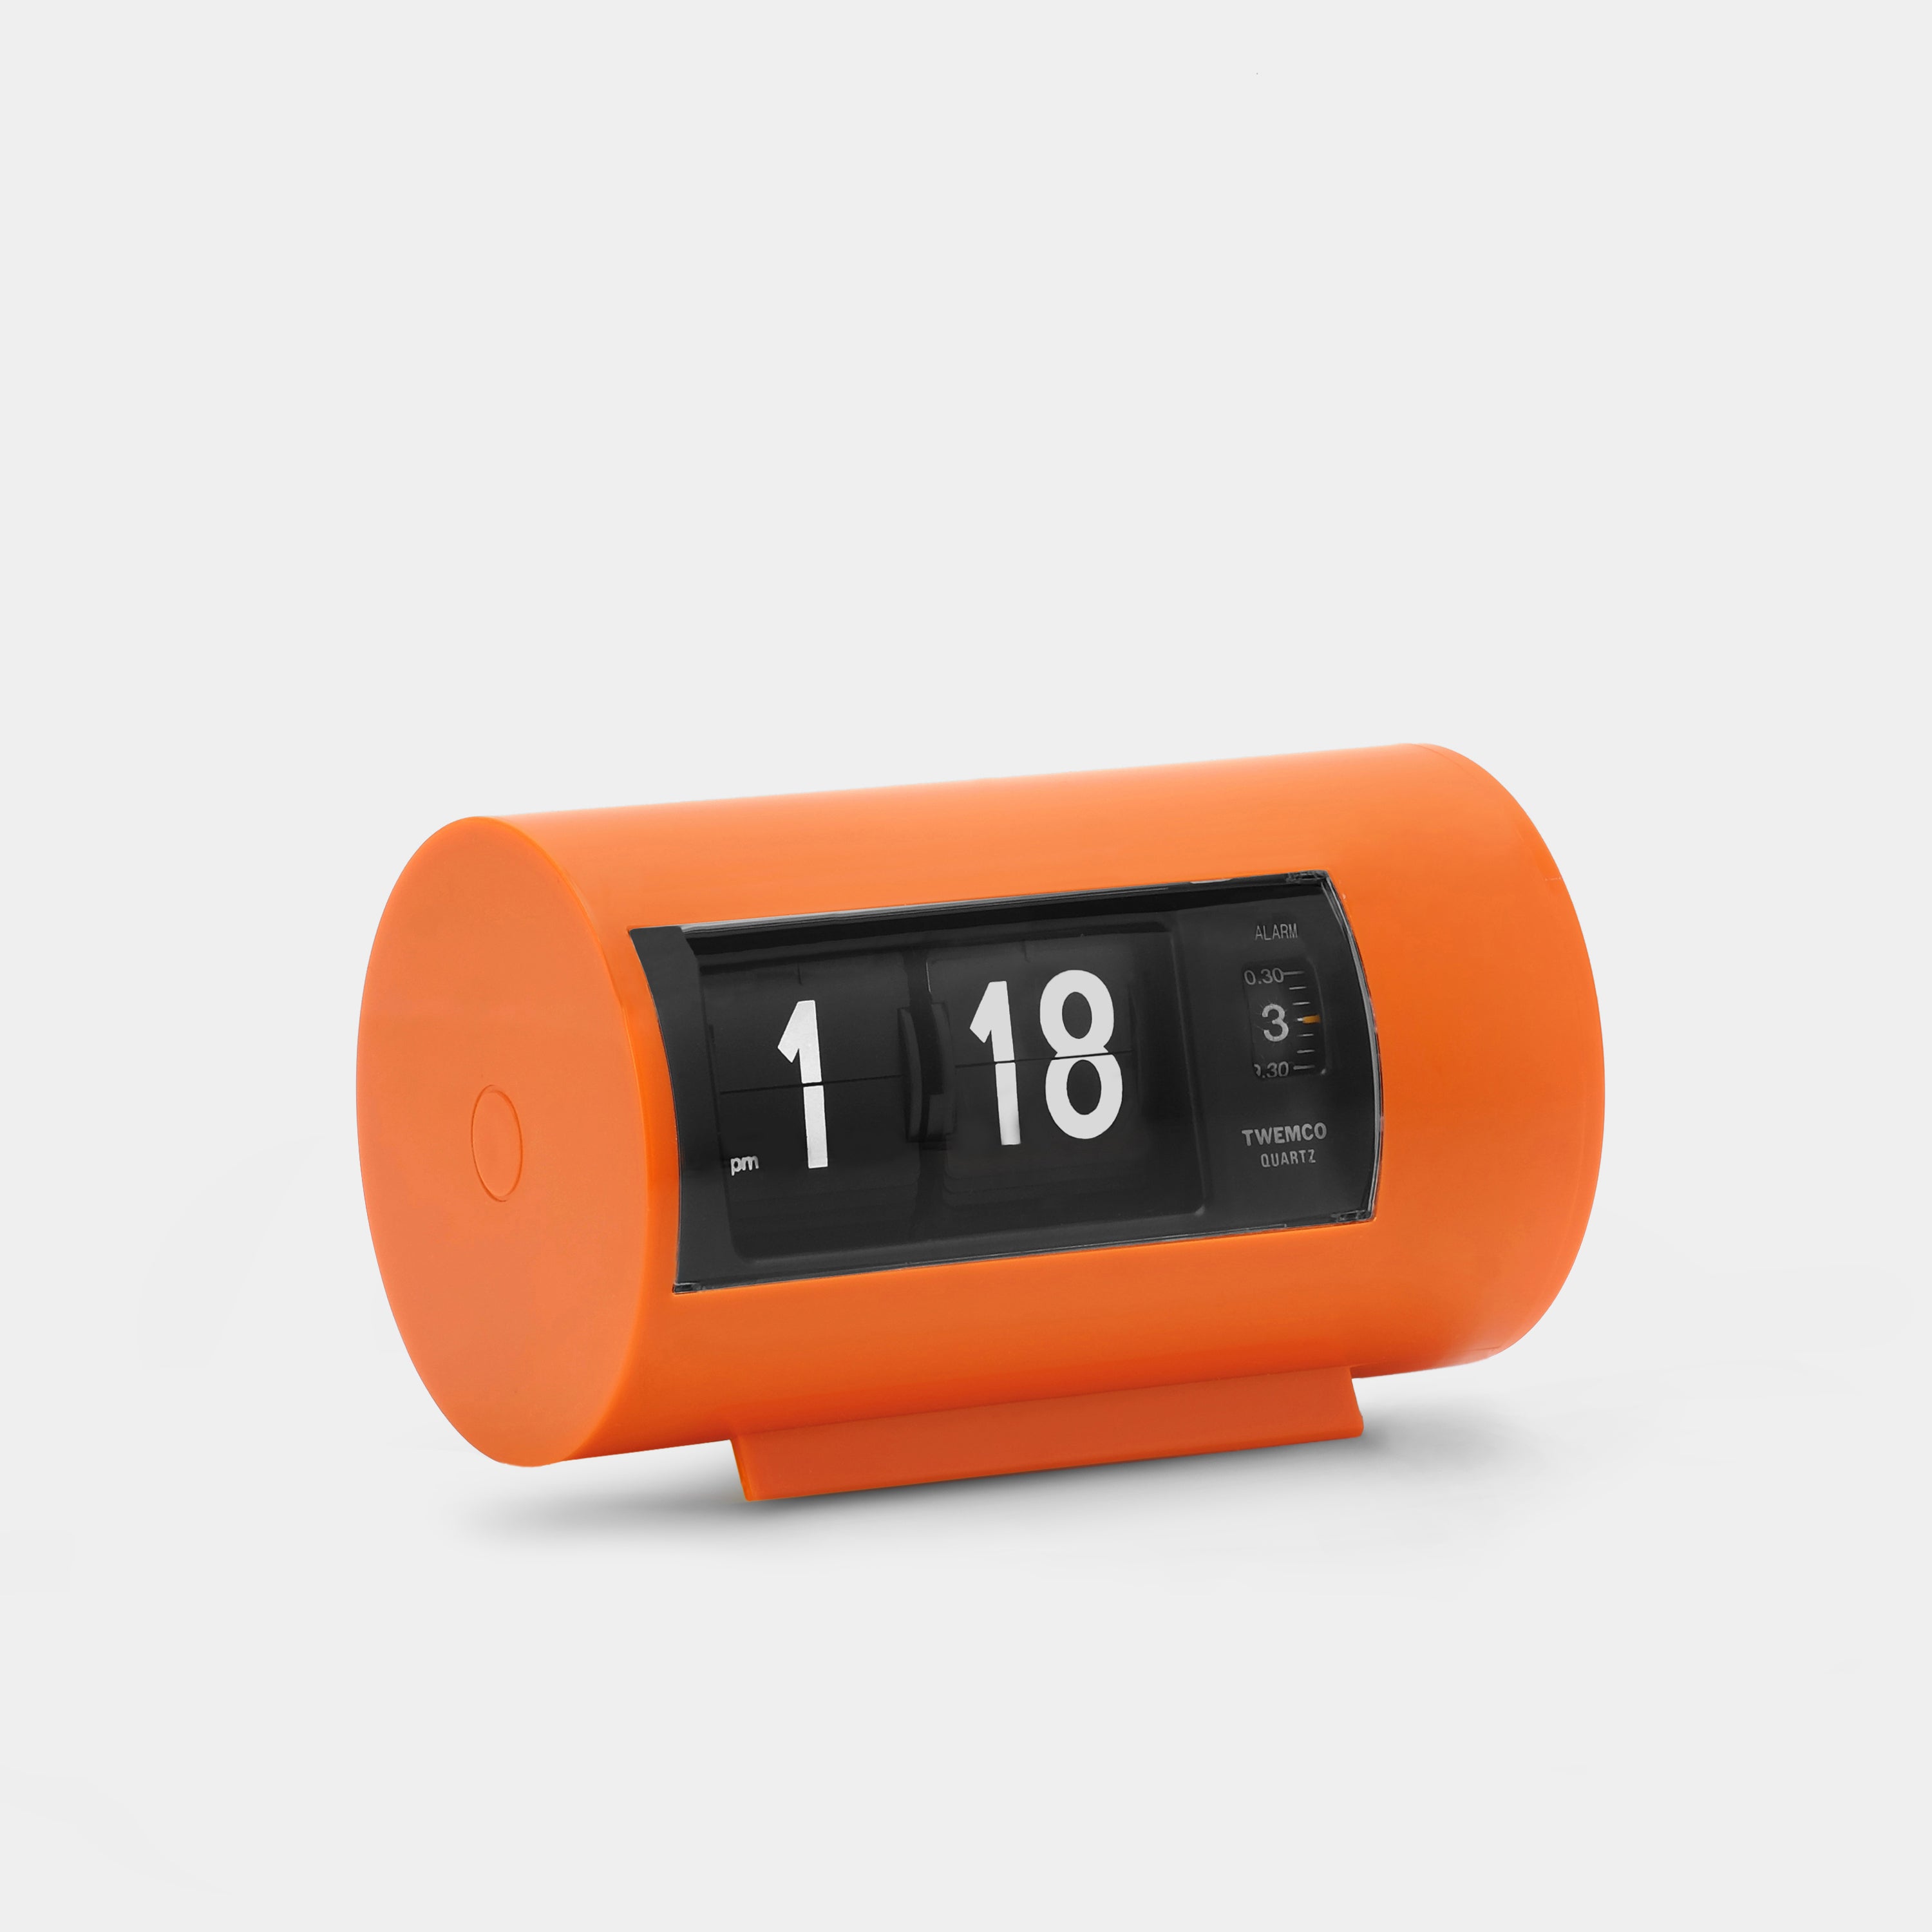 Twemco AP-28 Analog Flip Clock with Alarm